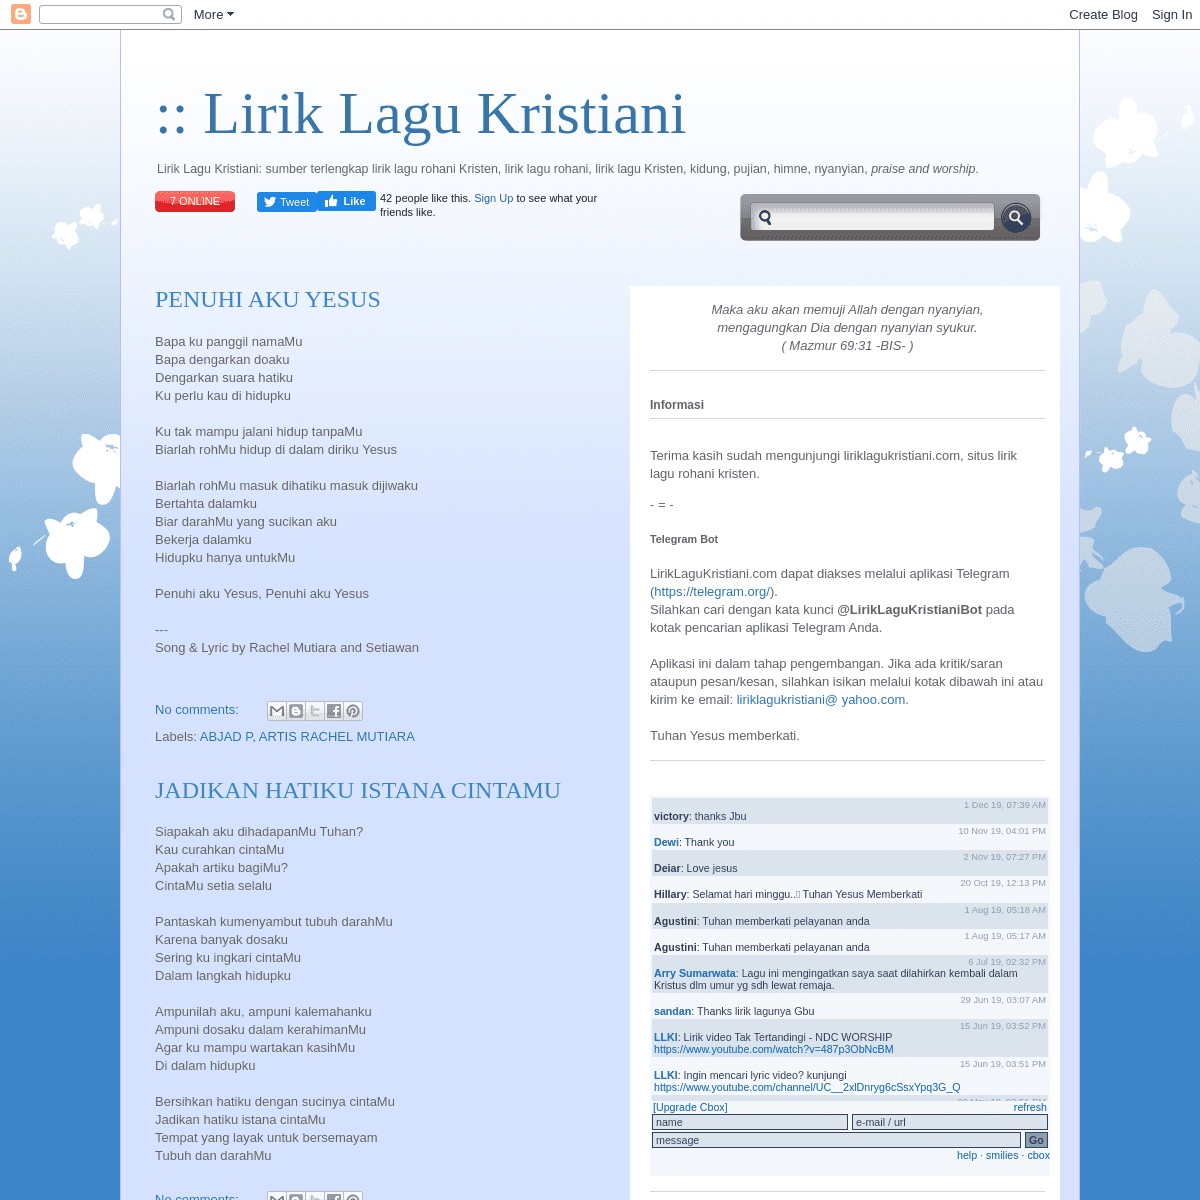 A complete backup of liriklagukristiani.com